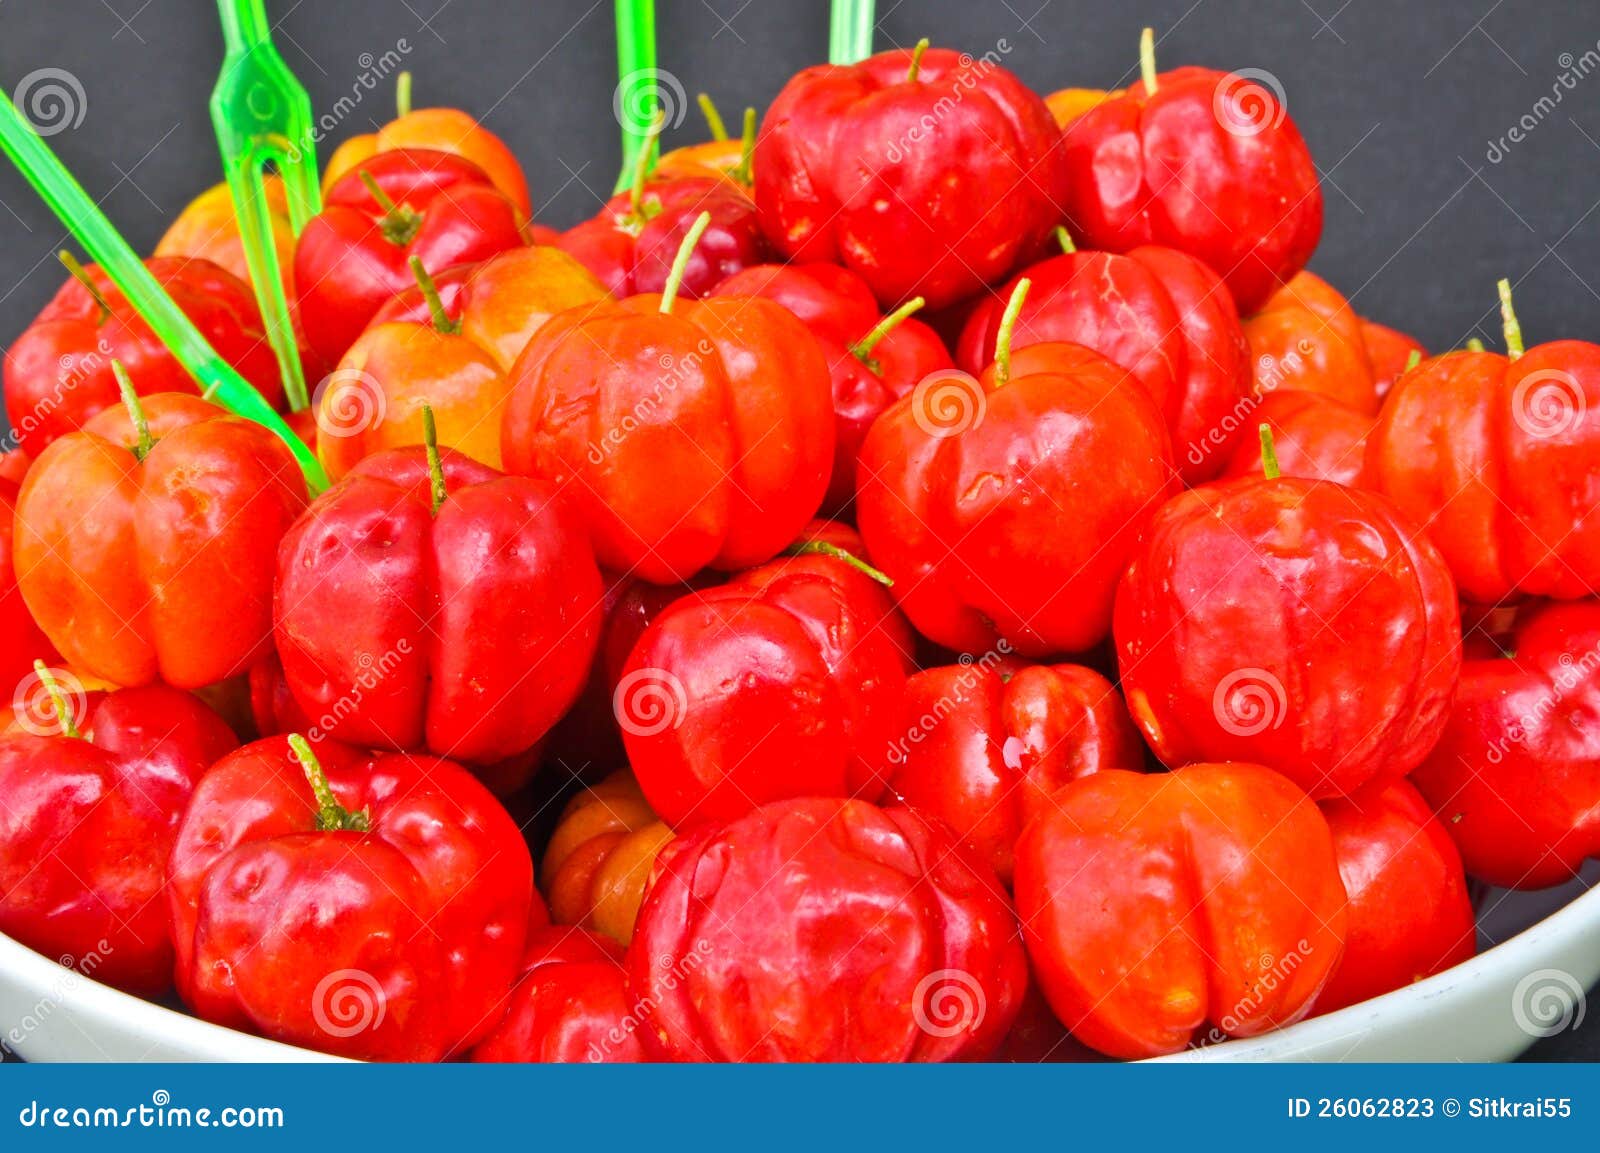 The Spanish cherry ripe stock image. Image of shiny, wild ...